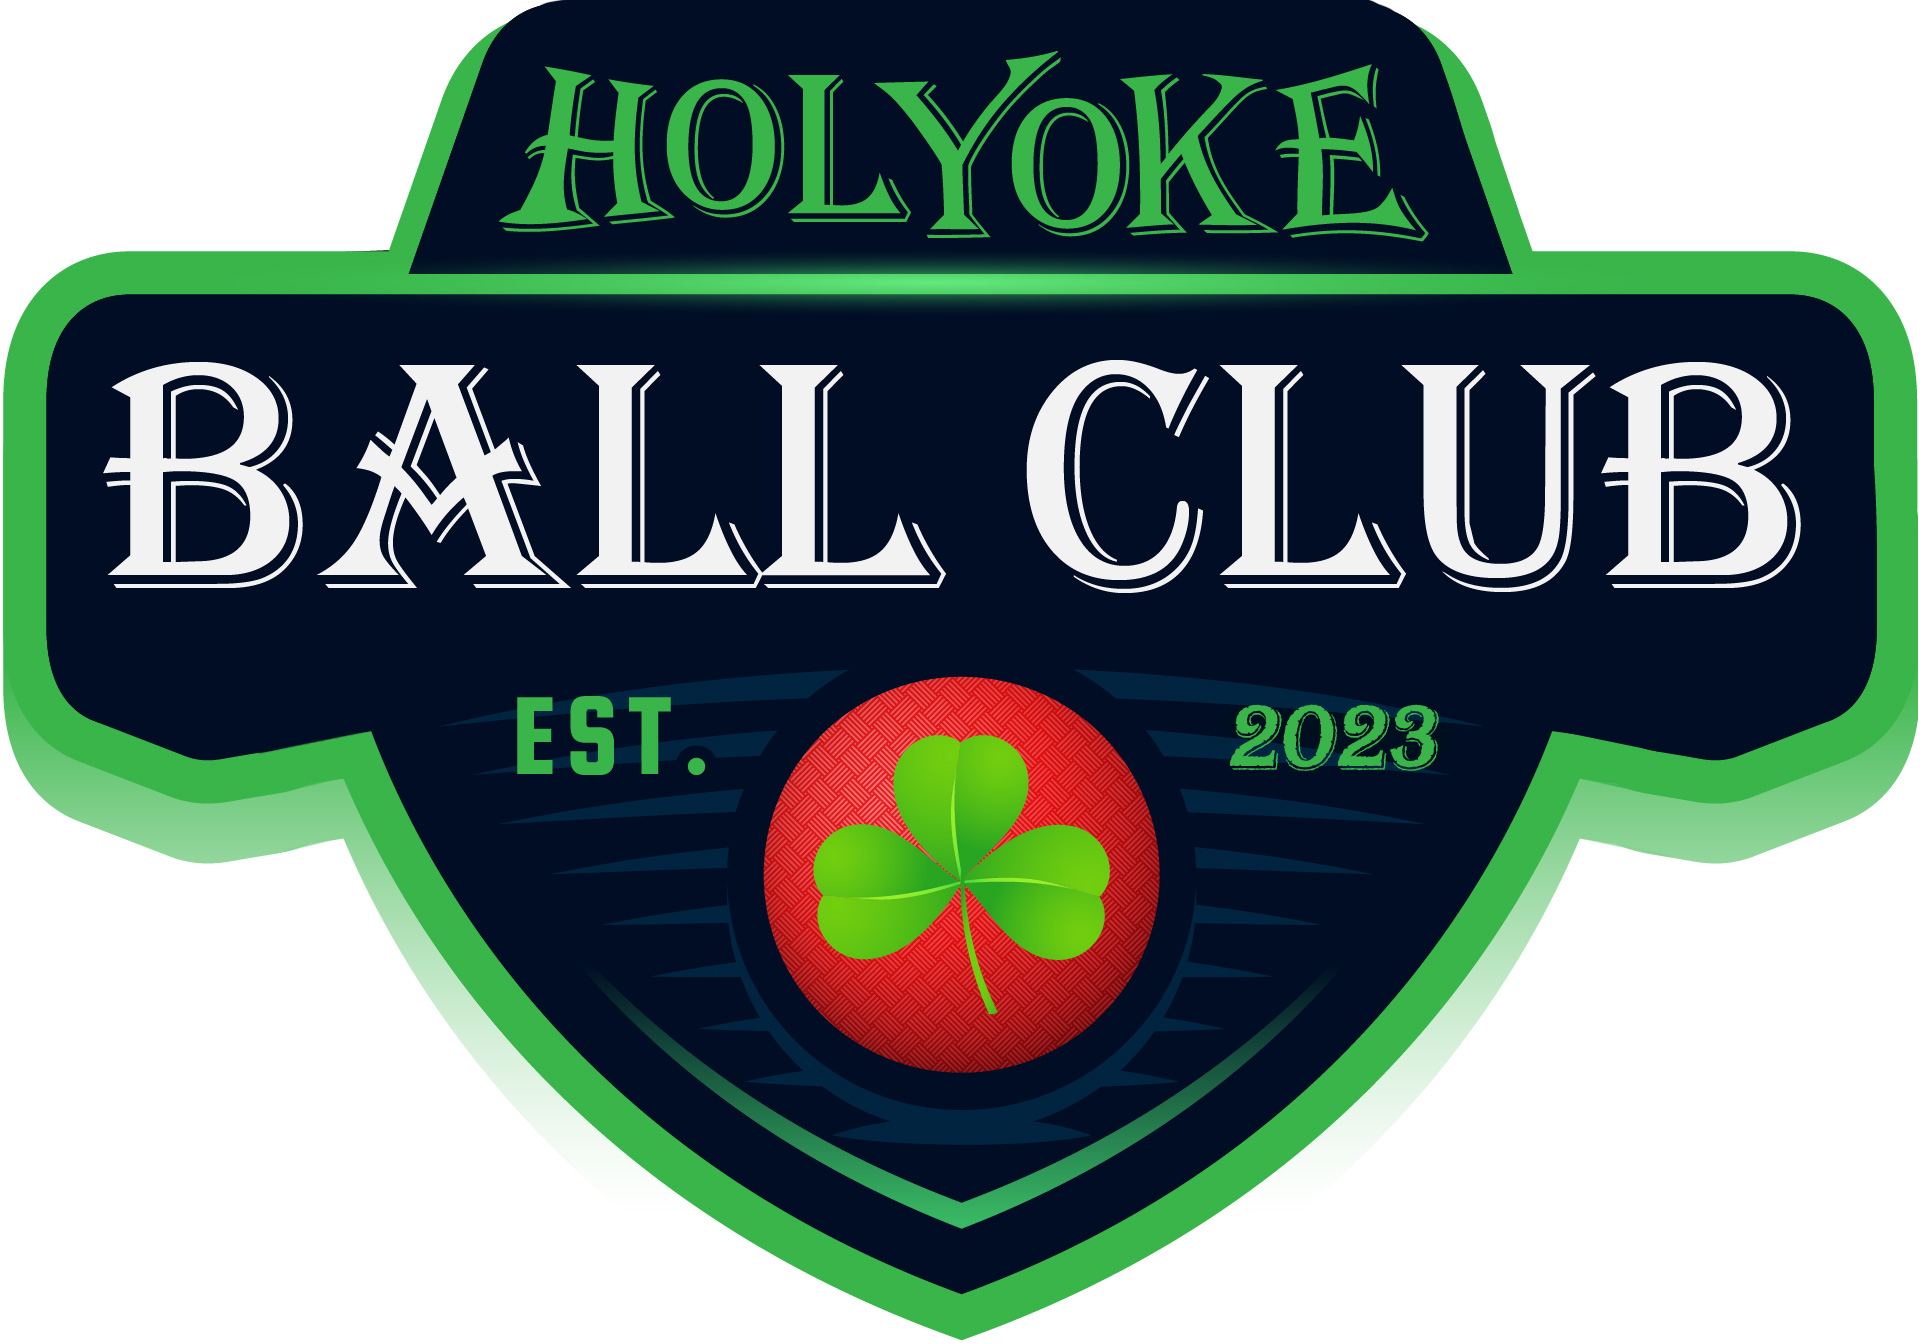 Holyoke Ball Club logo